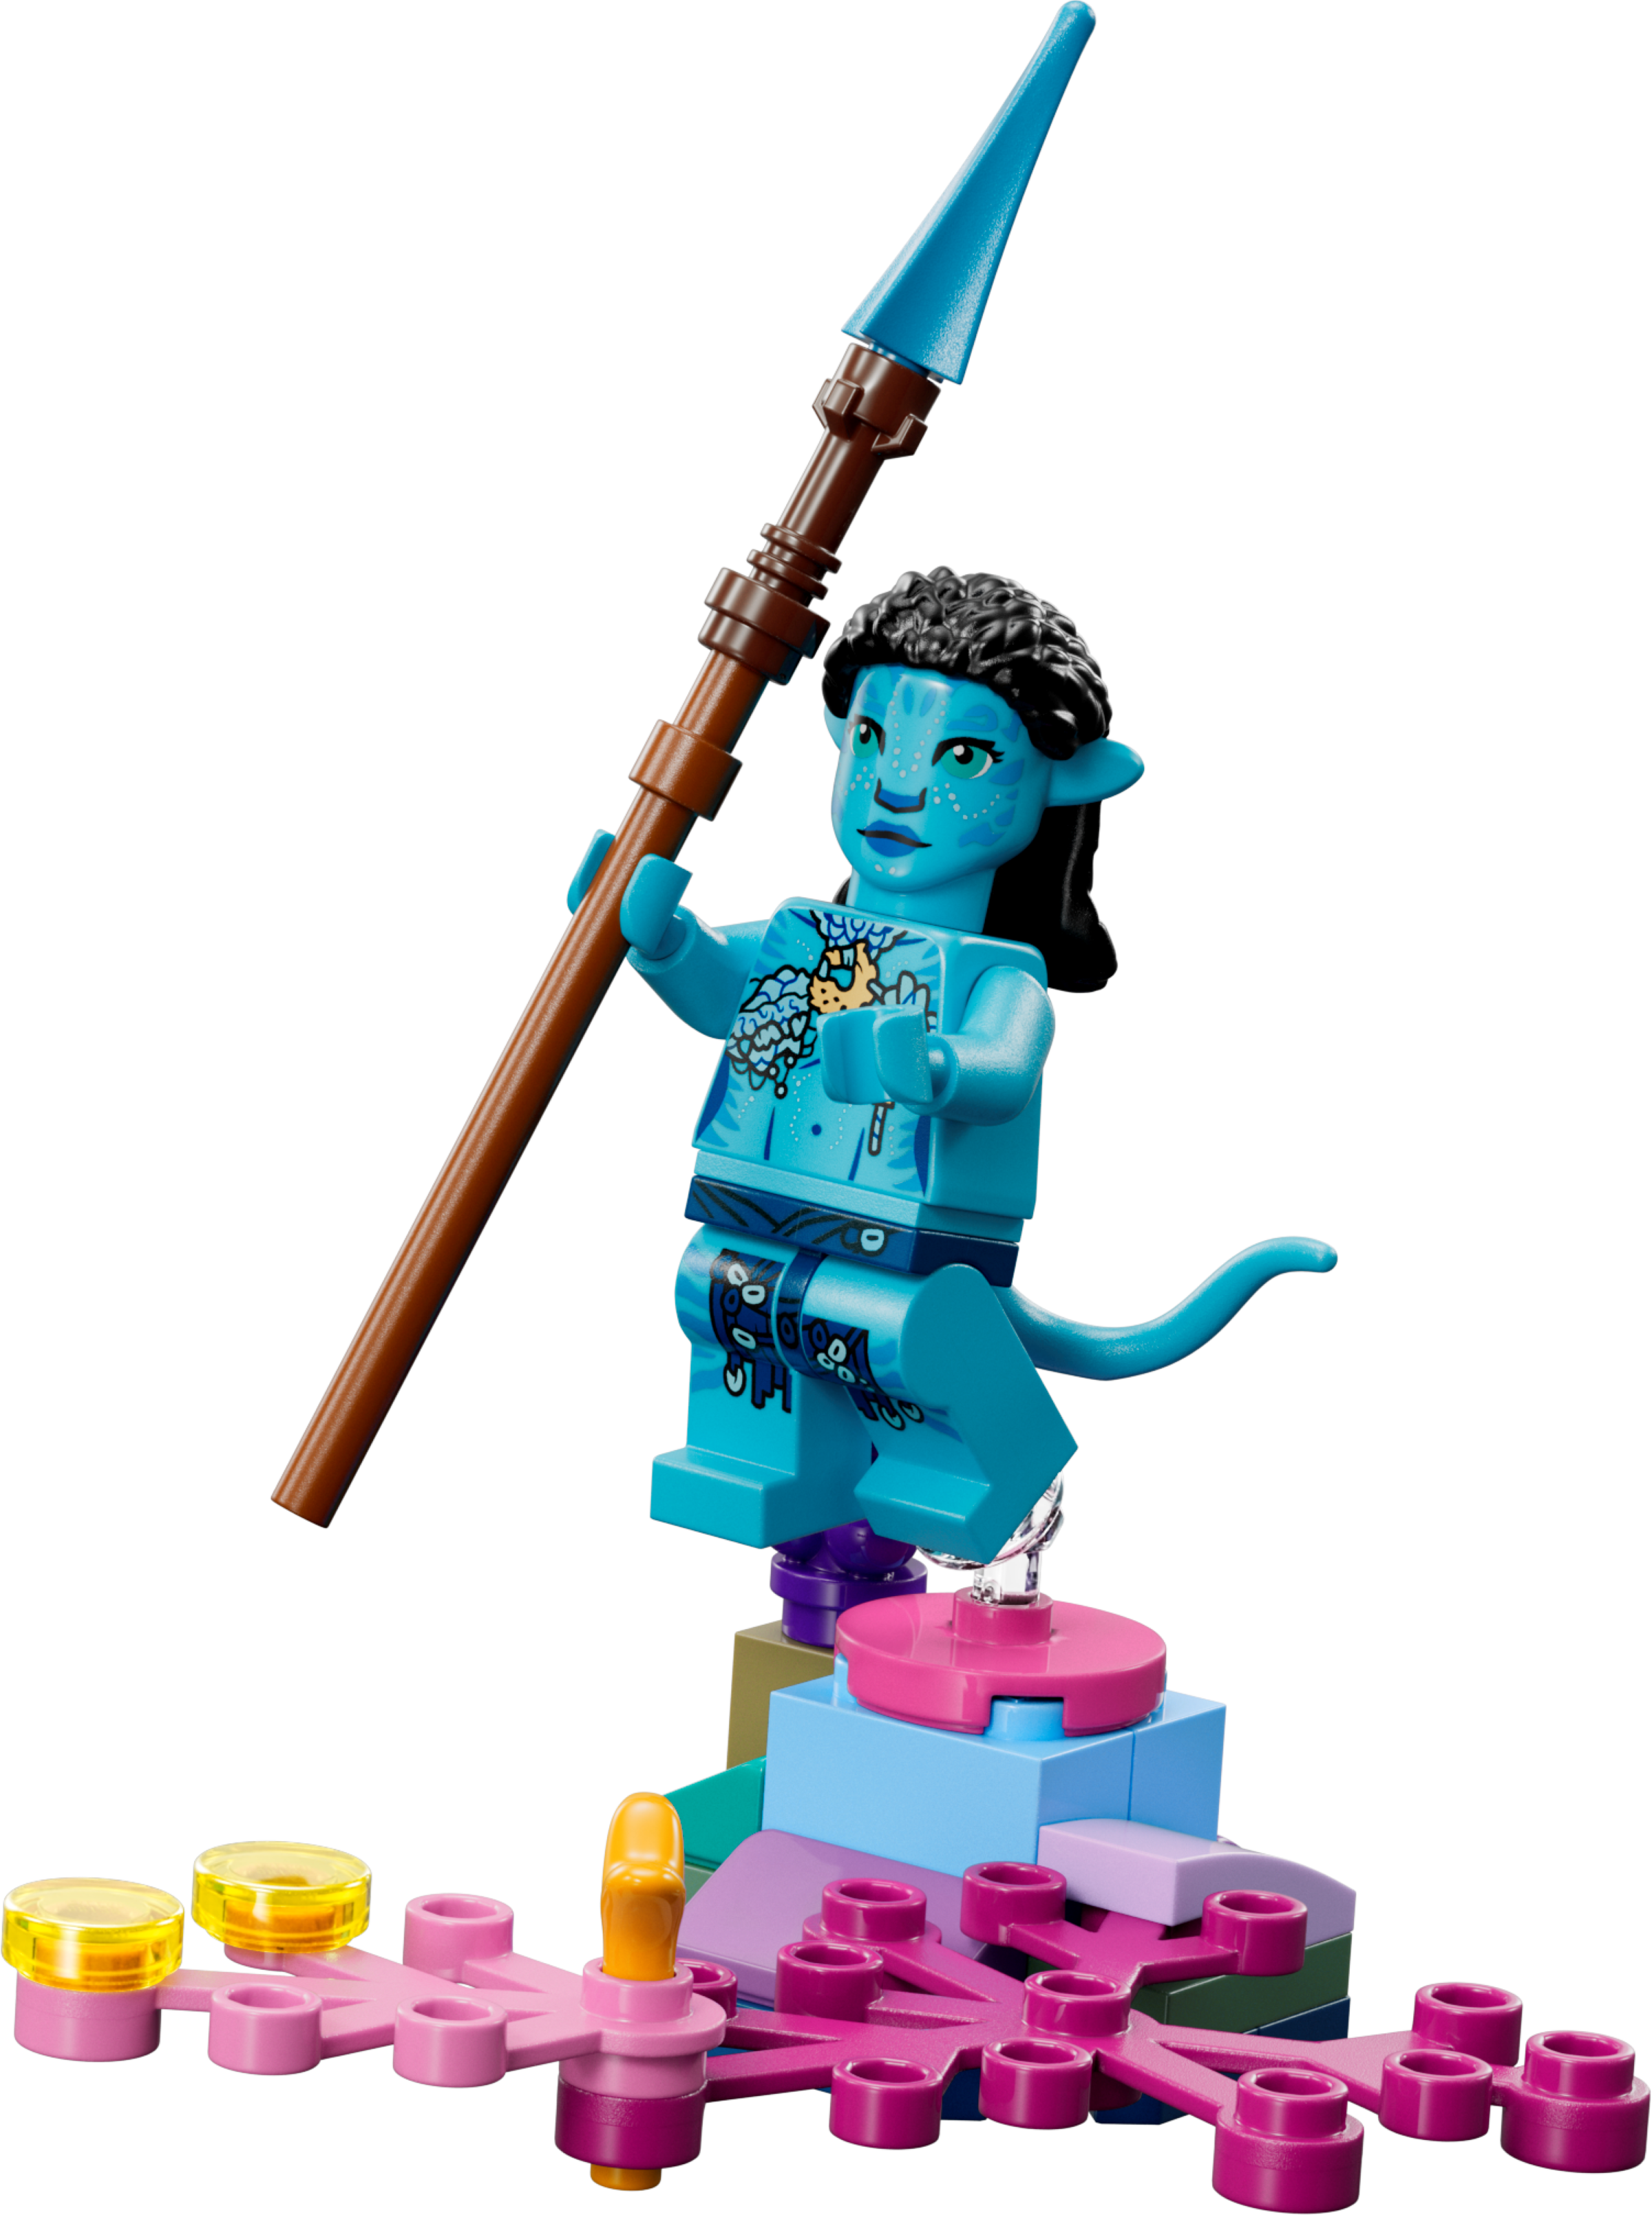 Lego Avatar Descubrimiento del Ilu